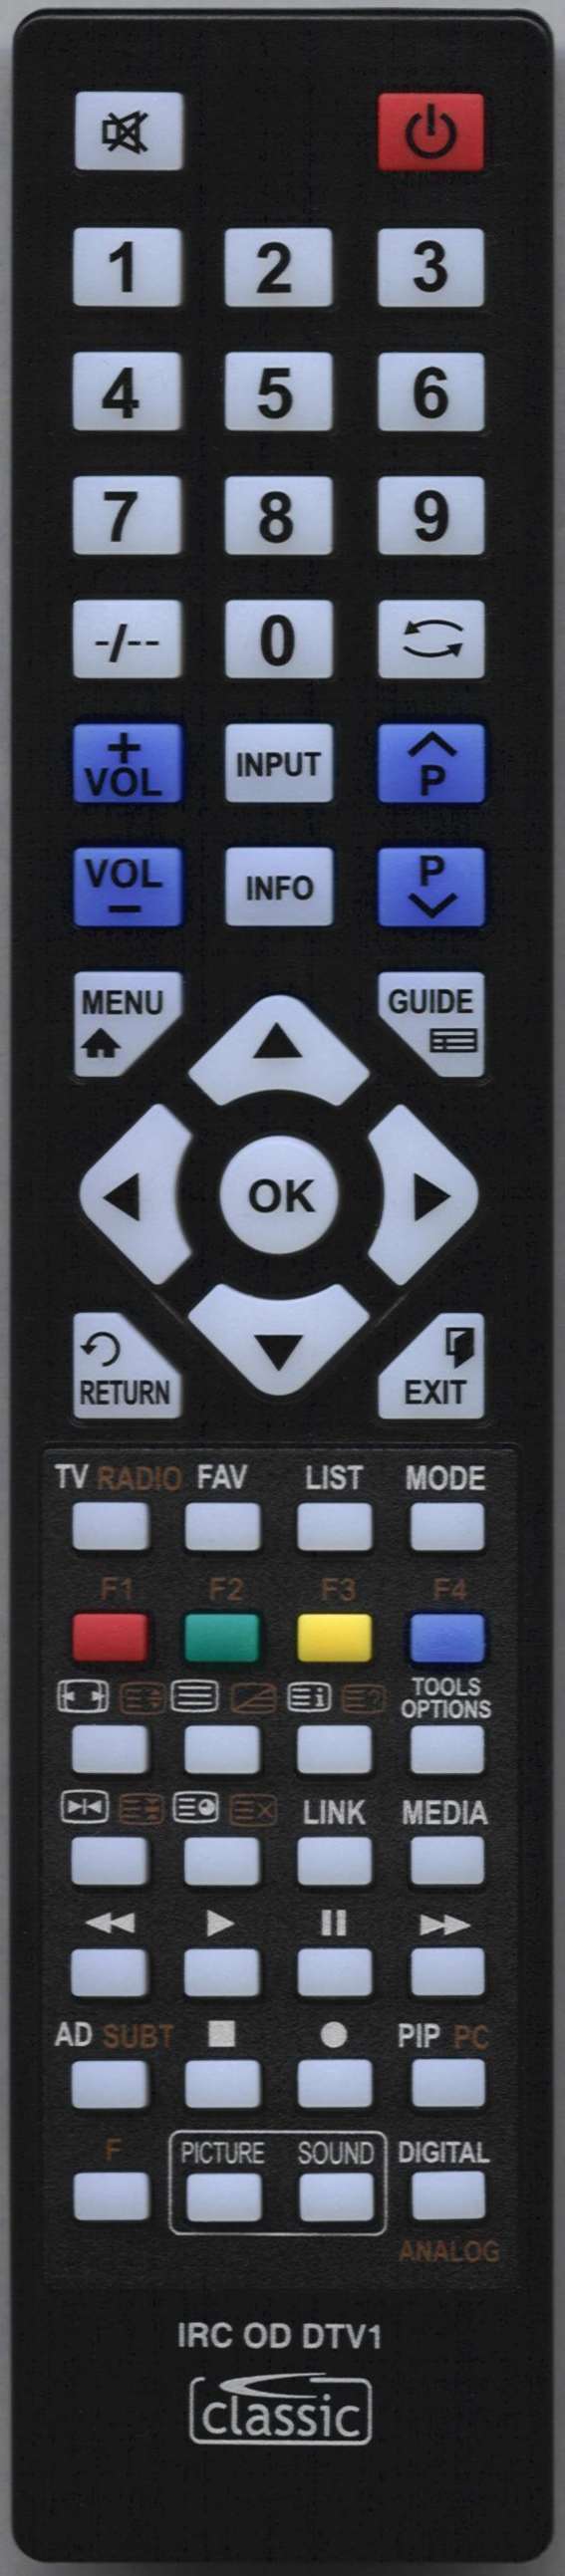 LG 49UF850V Remote Control Alternative